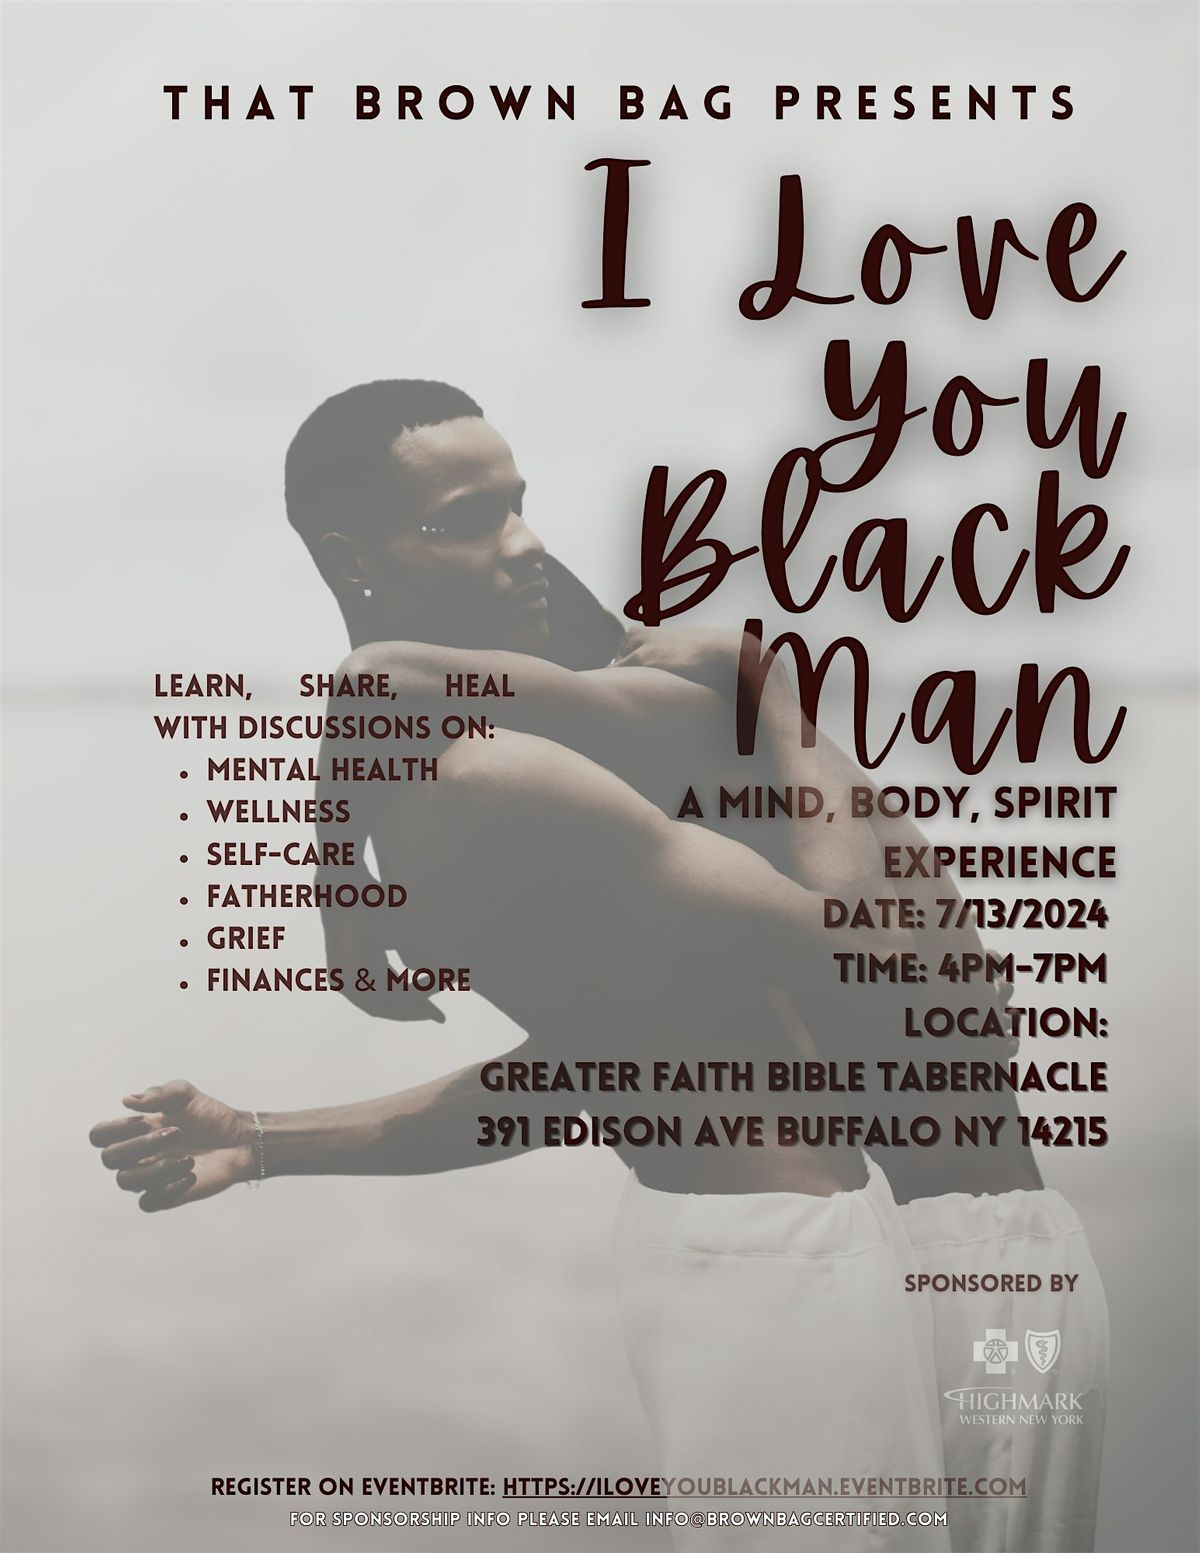 I Love You Black Man: A Mind, Body, Spirit Experience